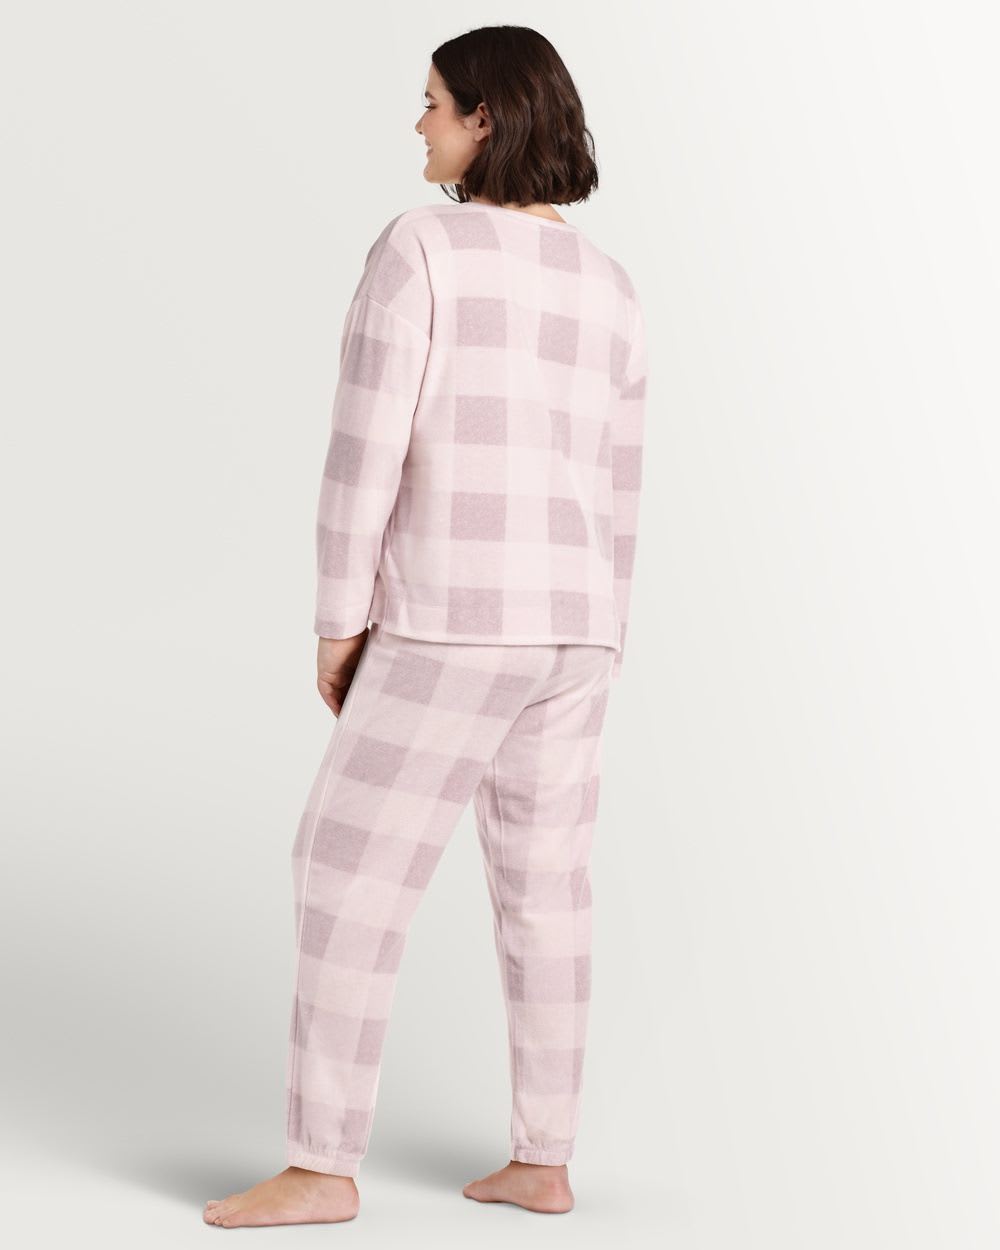 Deluxe Plaid Fleece Pyjama Set